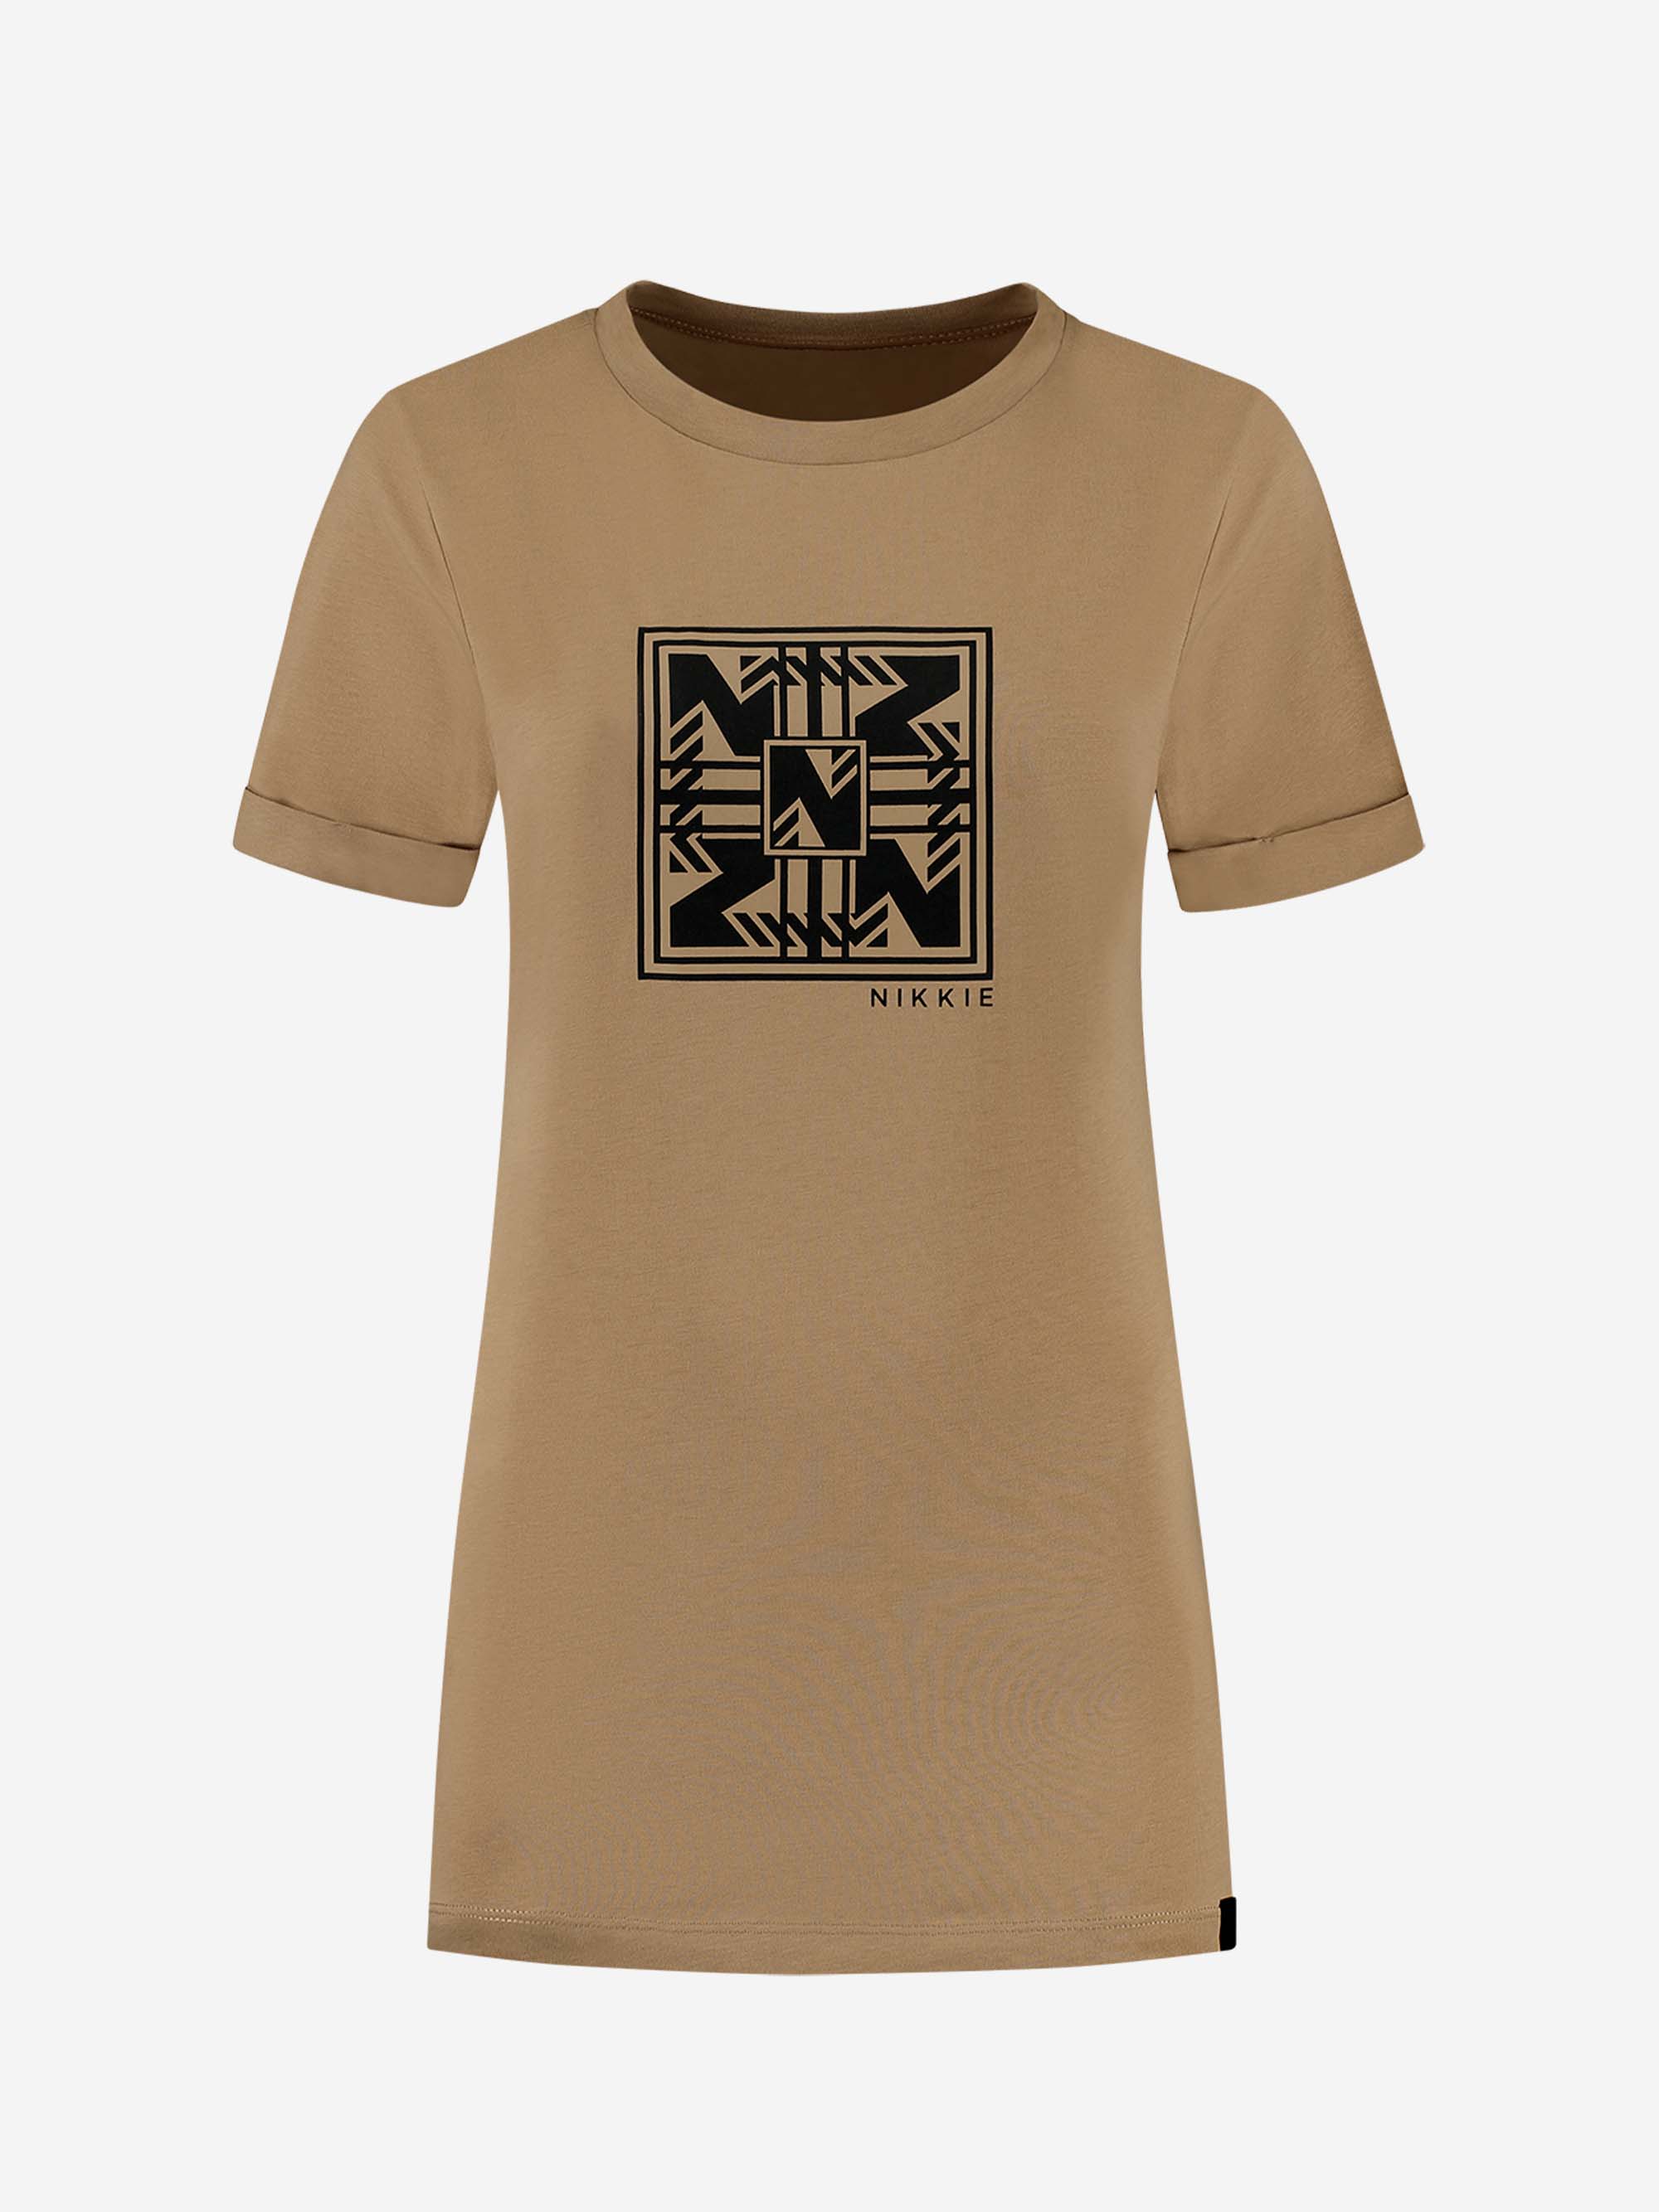 NIKKIE square t-shirt